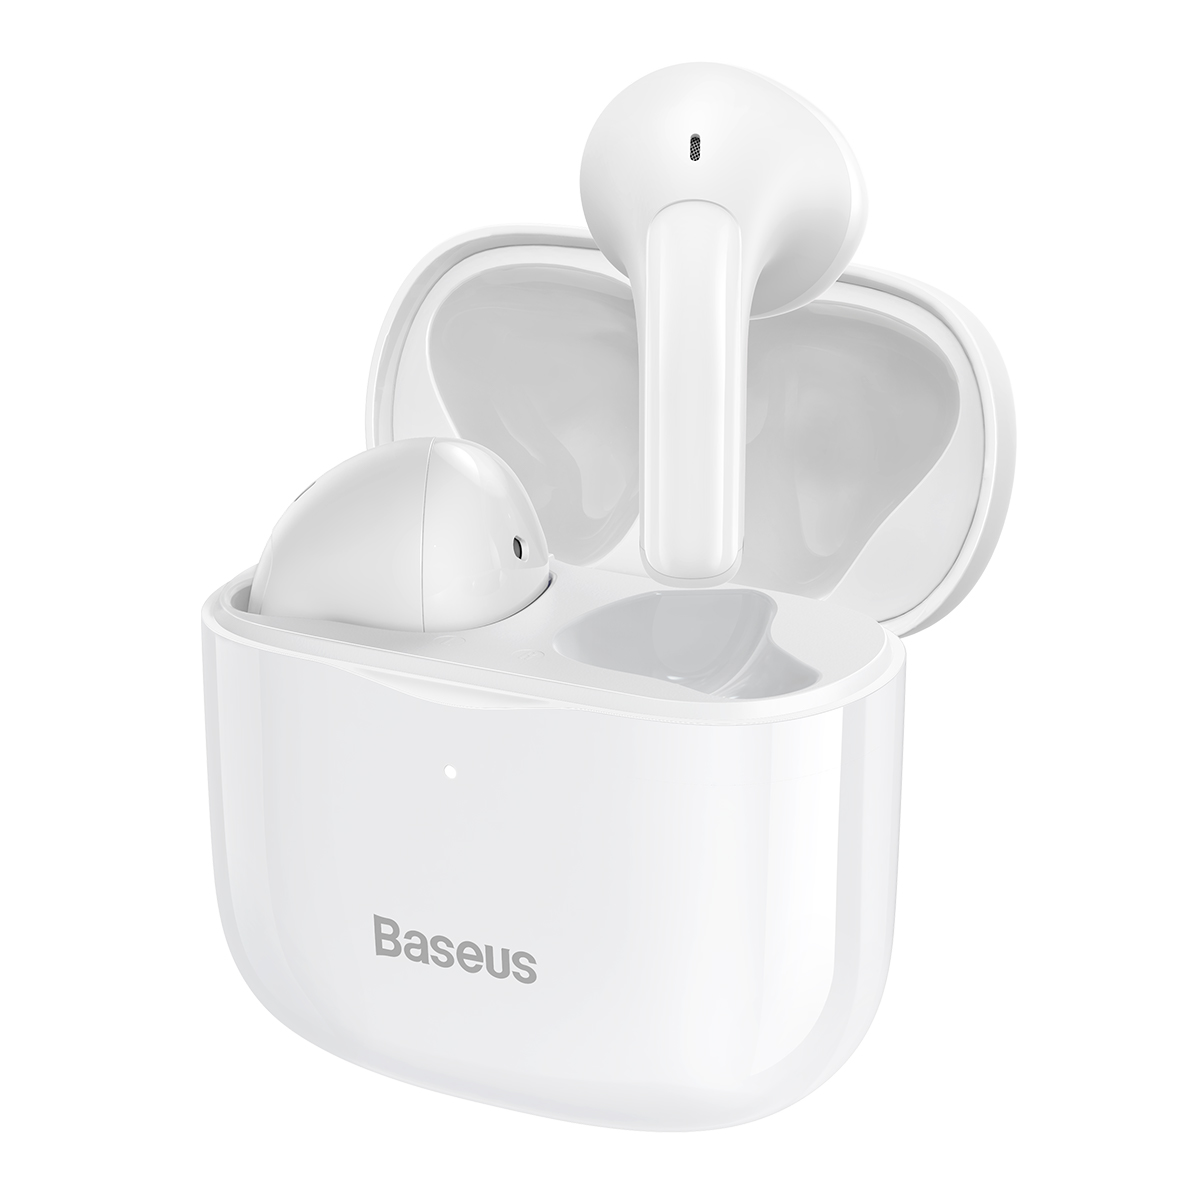 Baseus suchawki Bluetooth TWS Bowie E3 white / 3